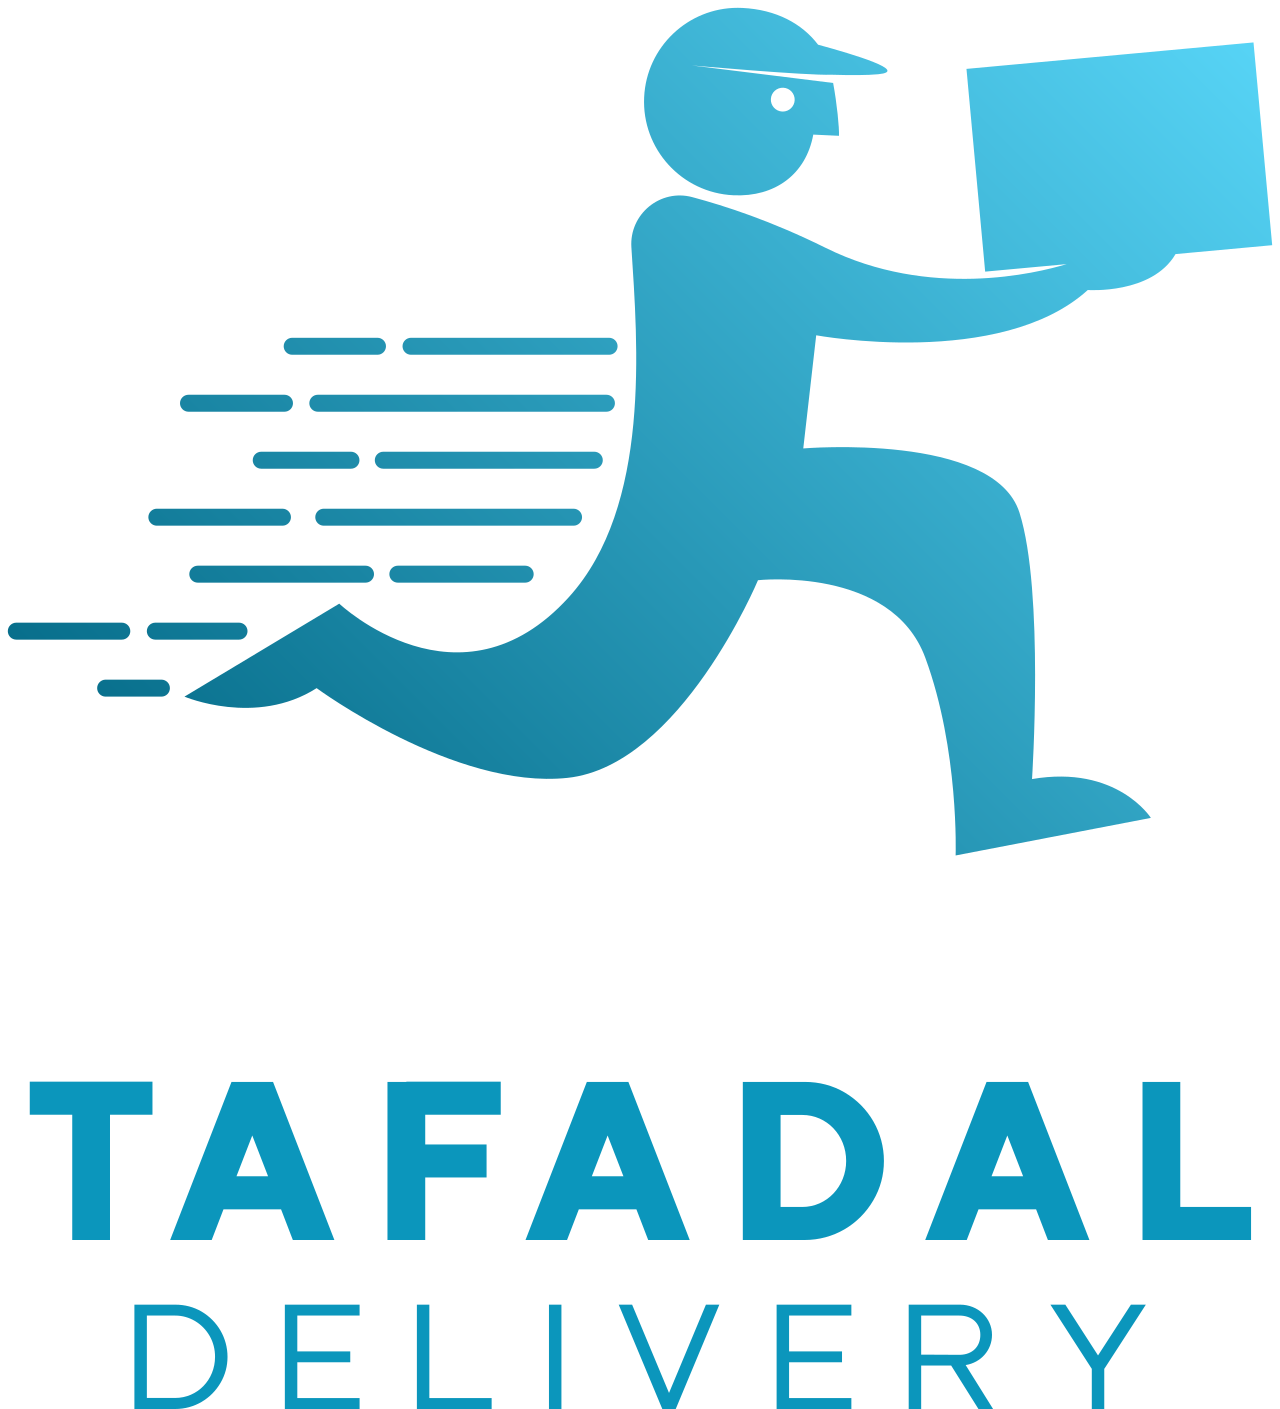 TAFADAL's logo